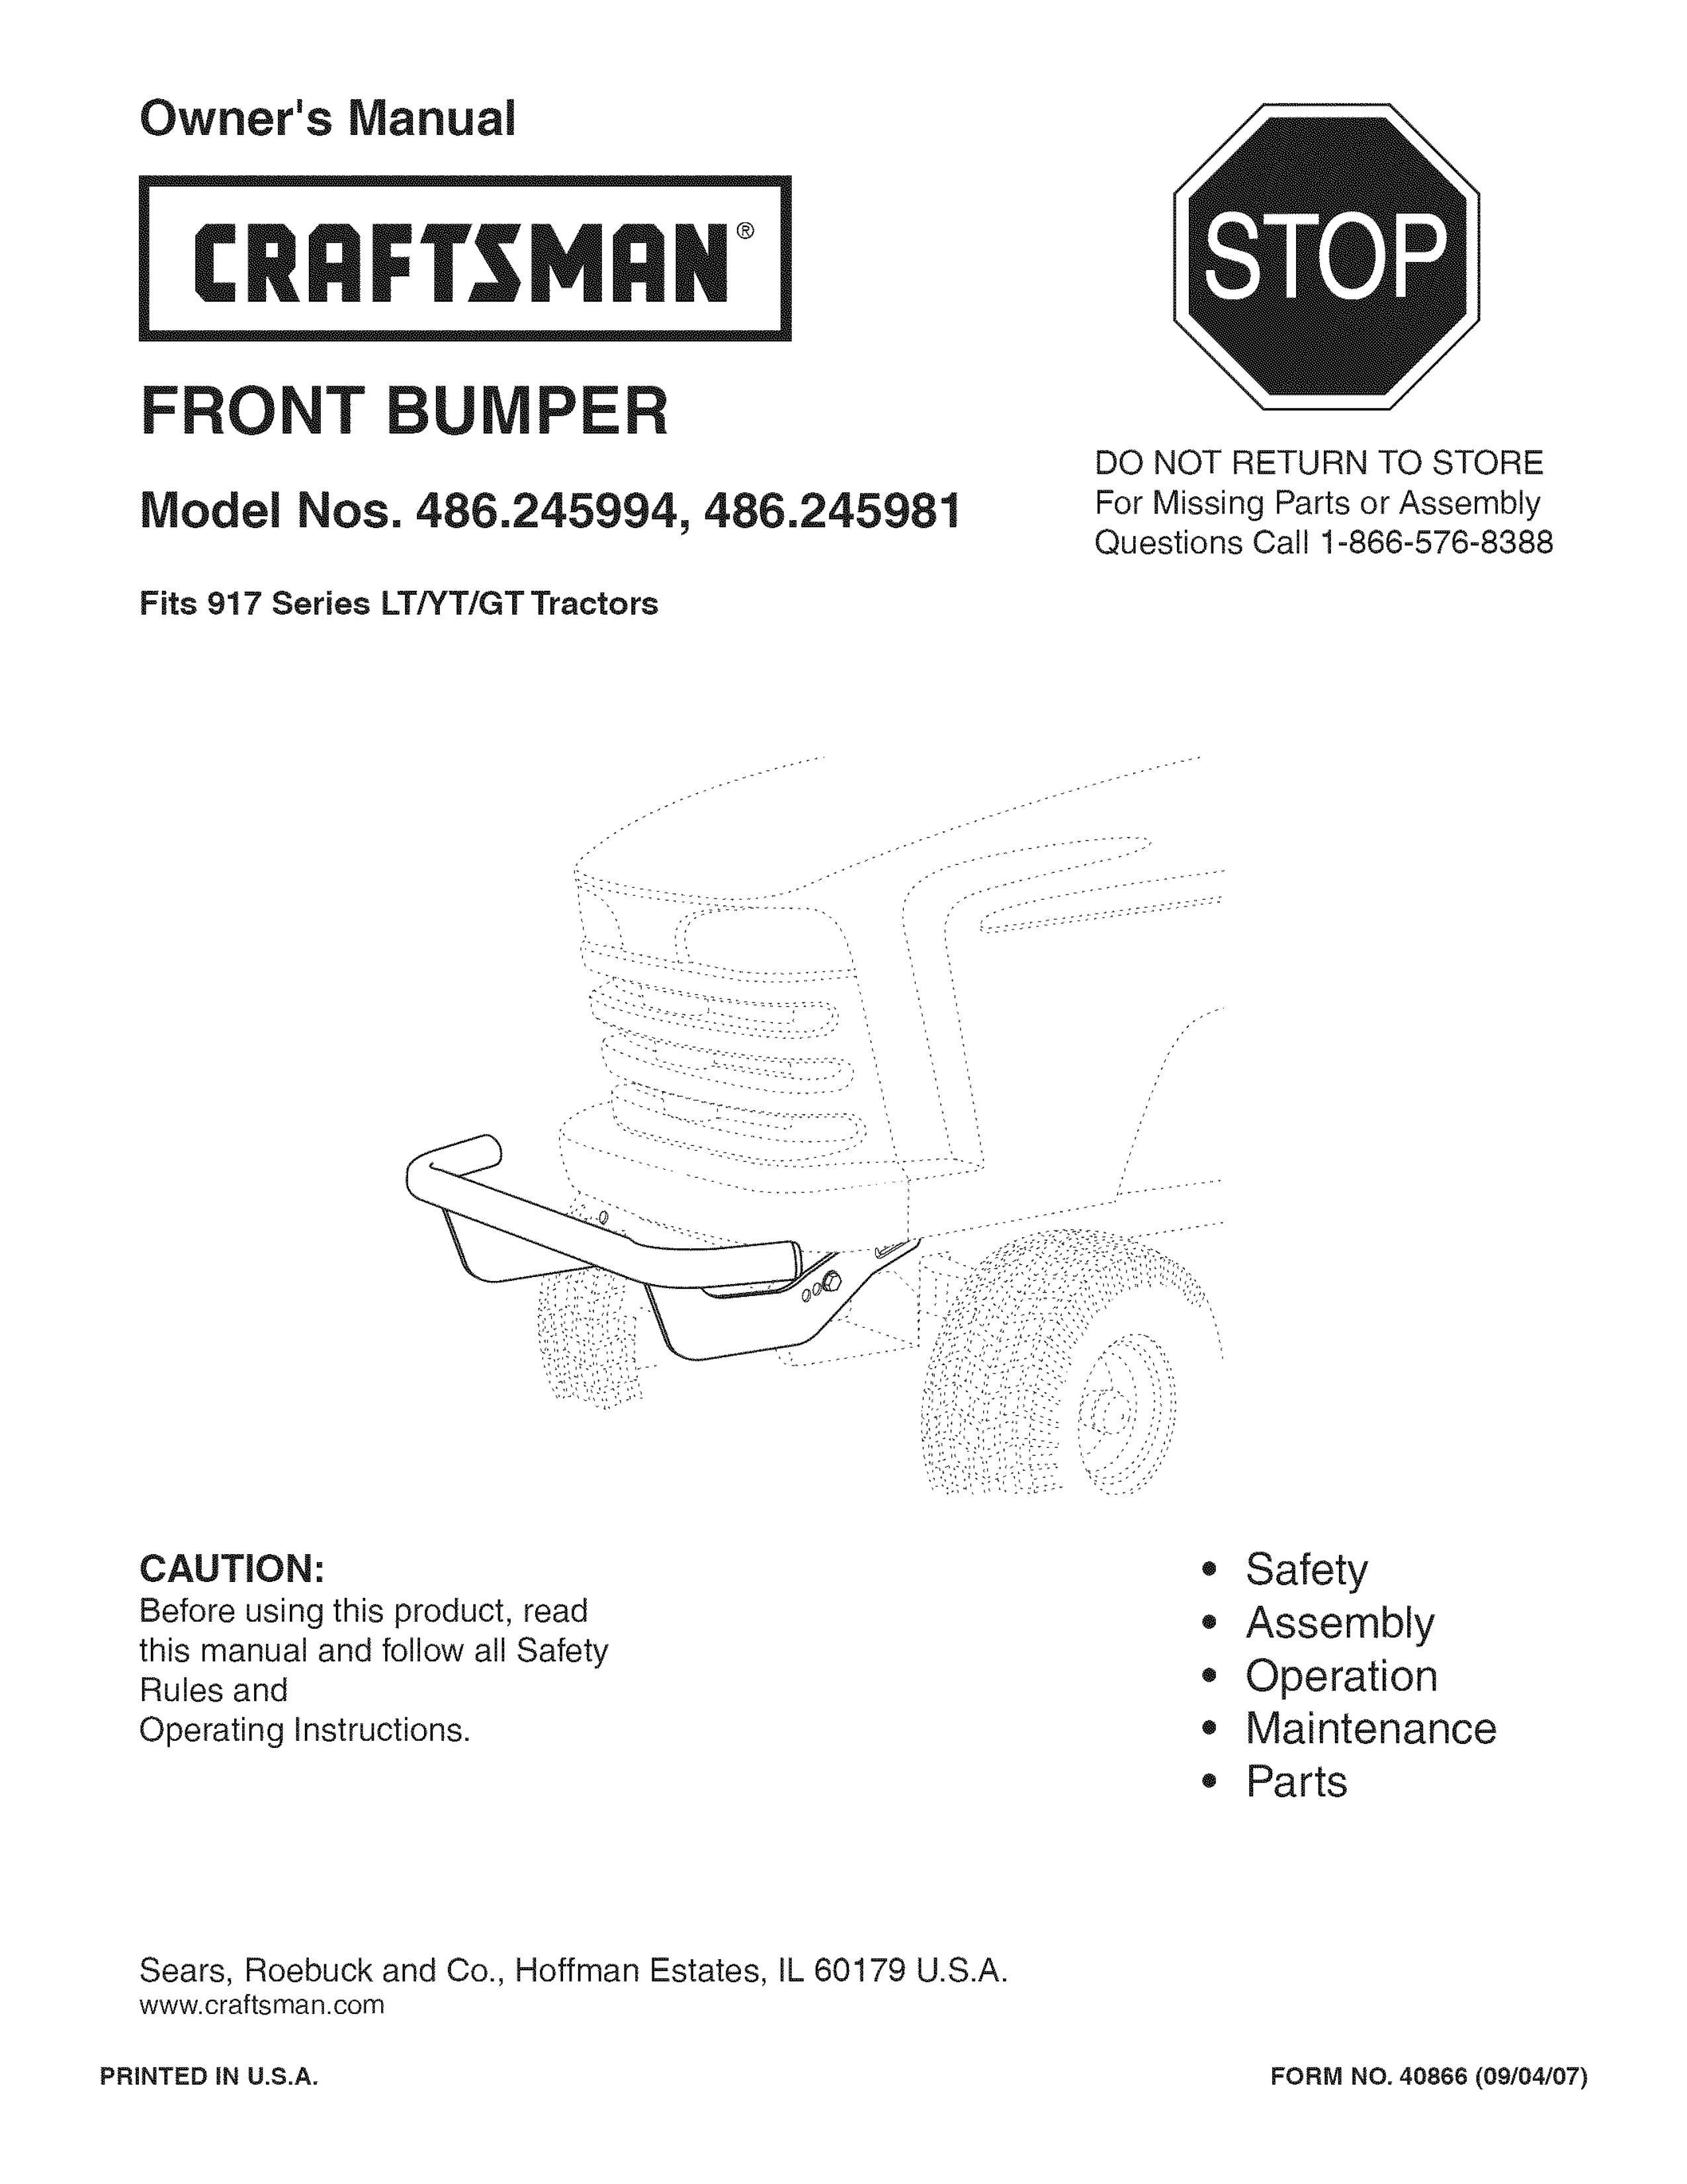 Craftsman 486.245981 Lawn Mower Accessory User Manual